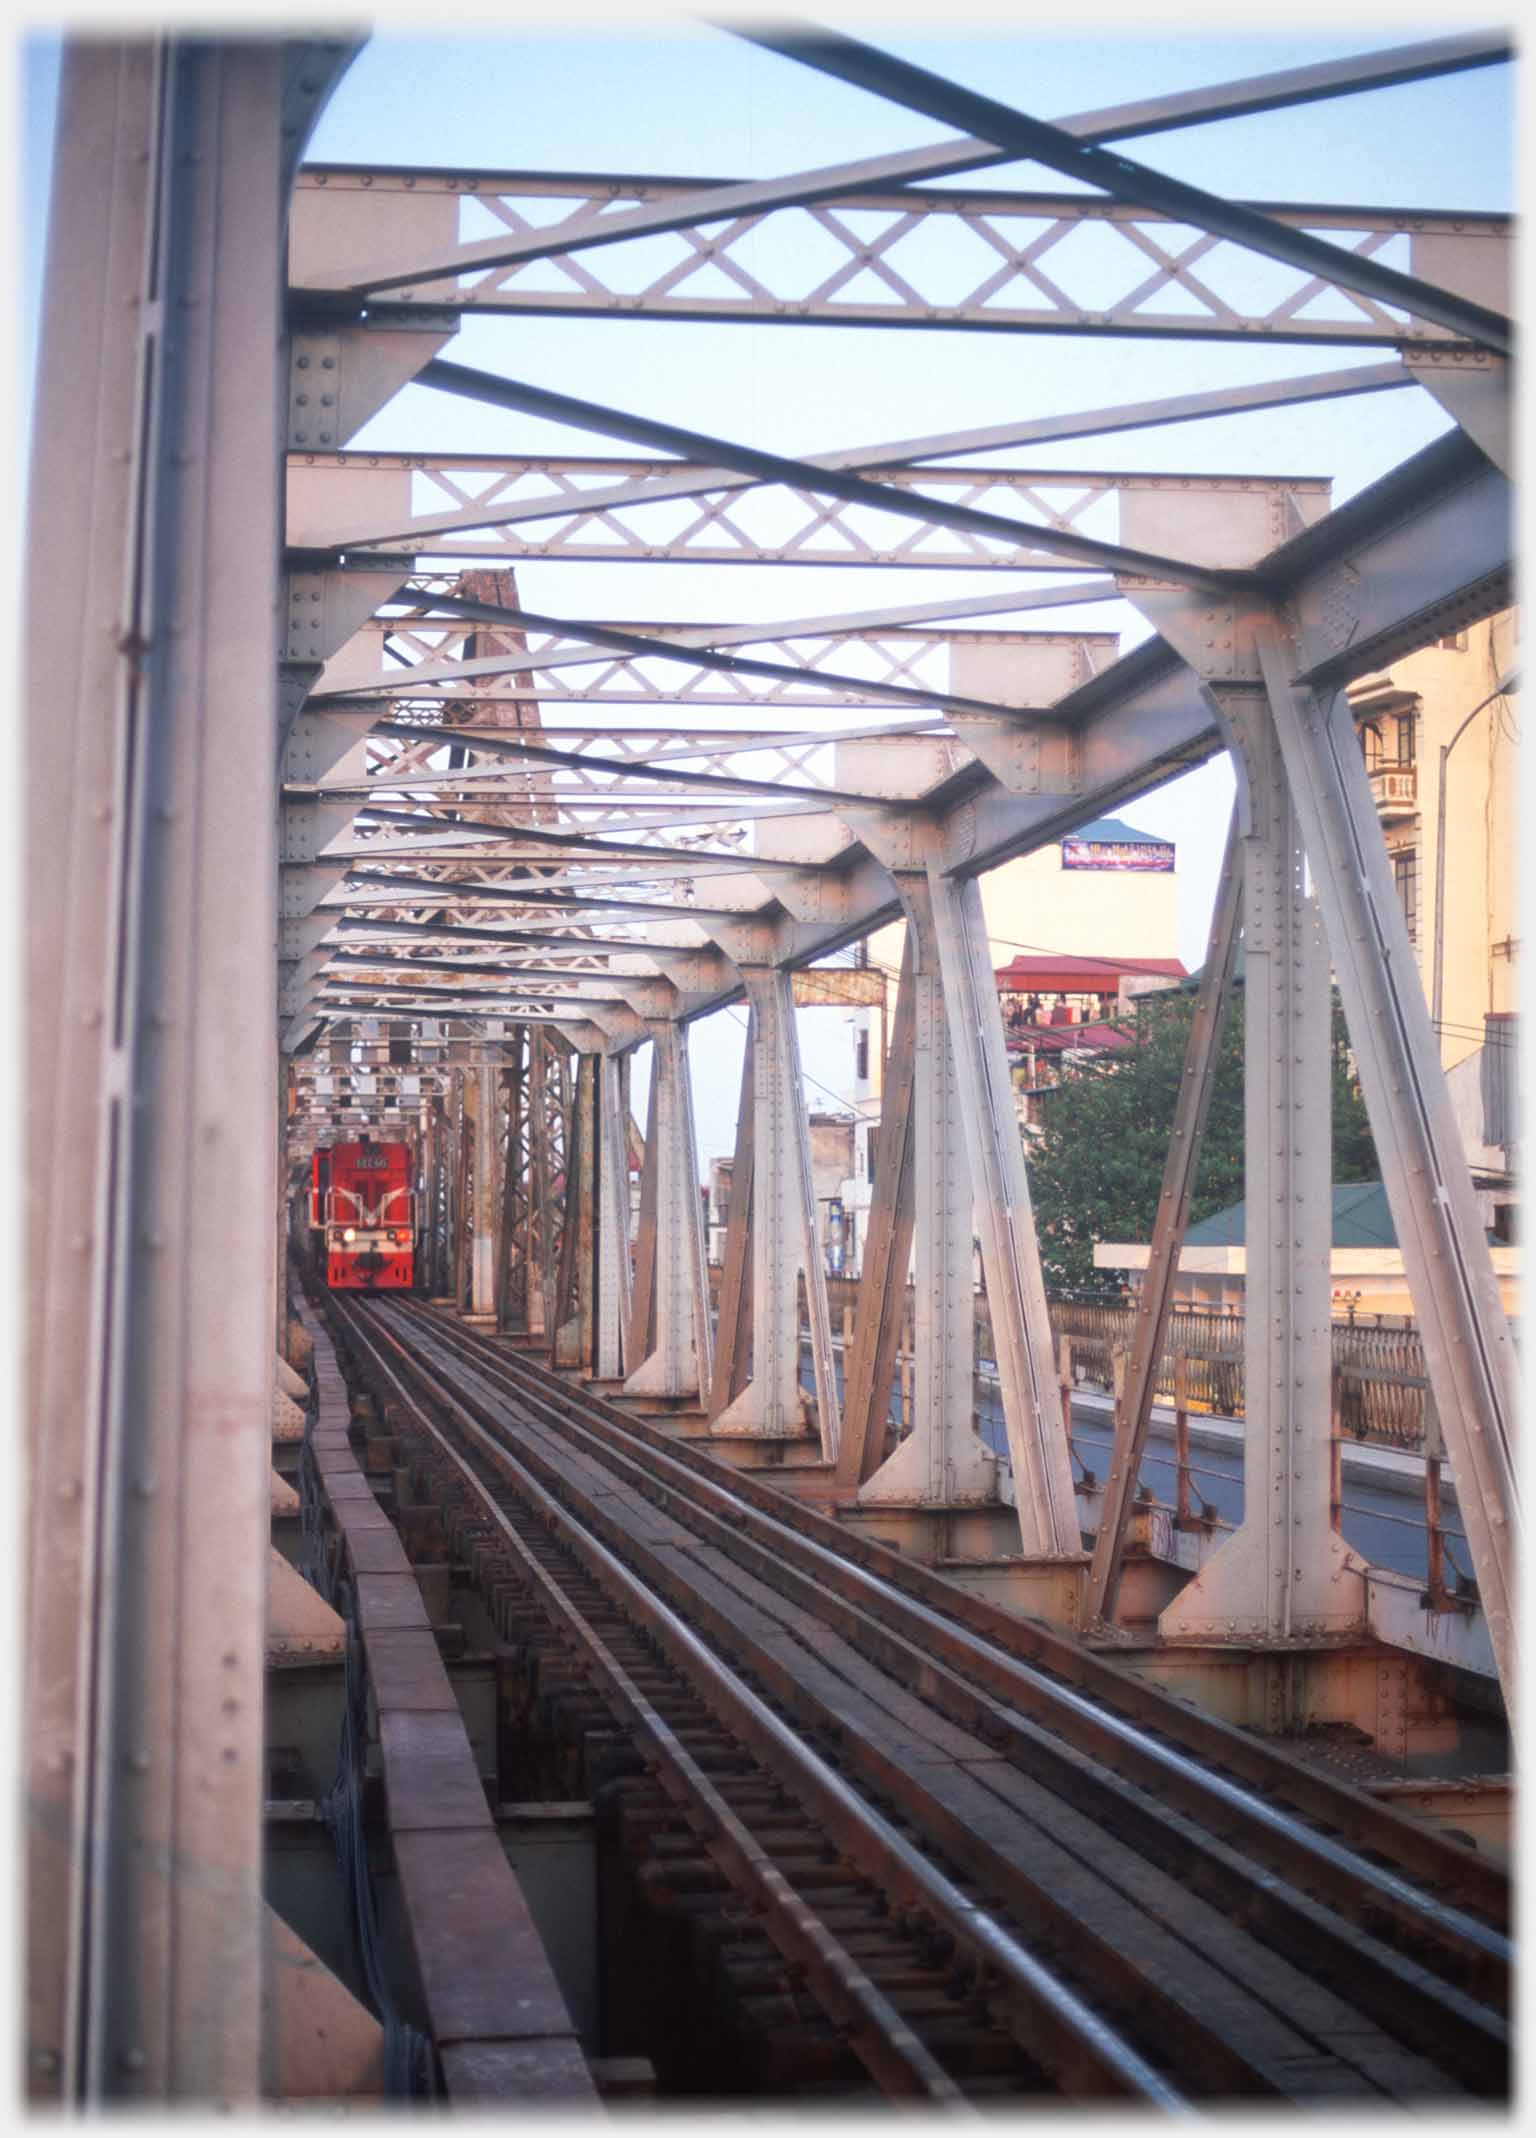 Rails encased in girders with train approaching.